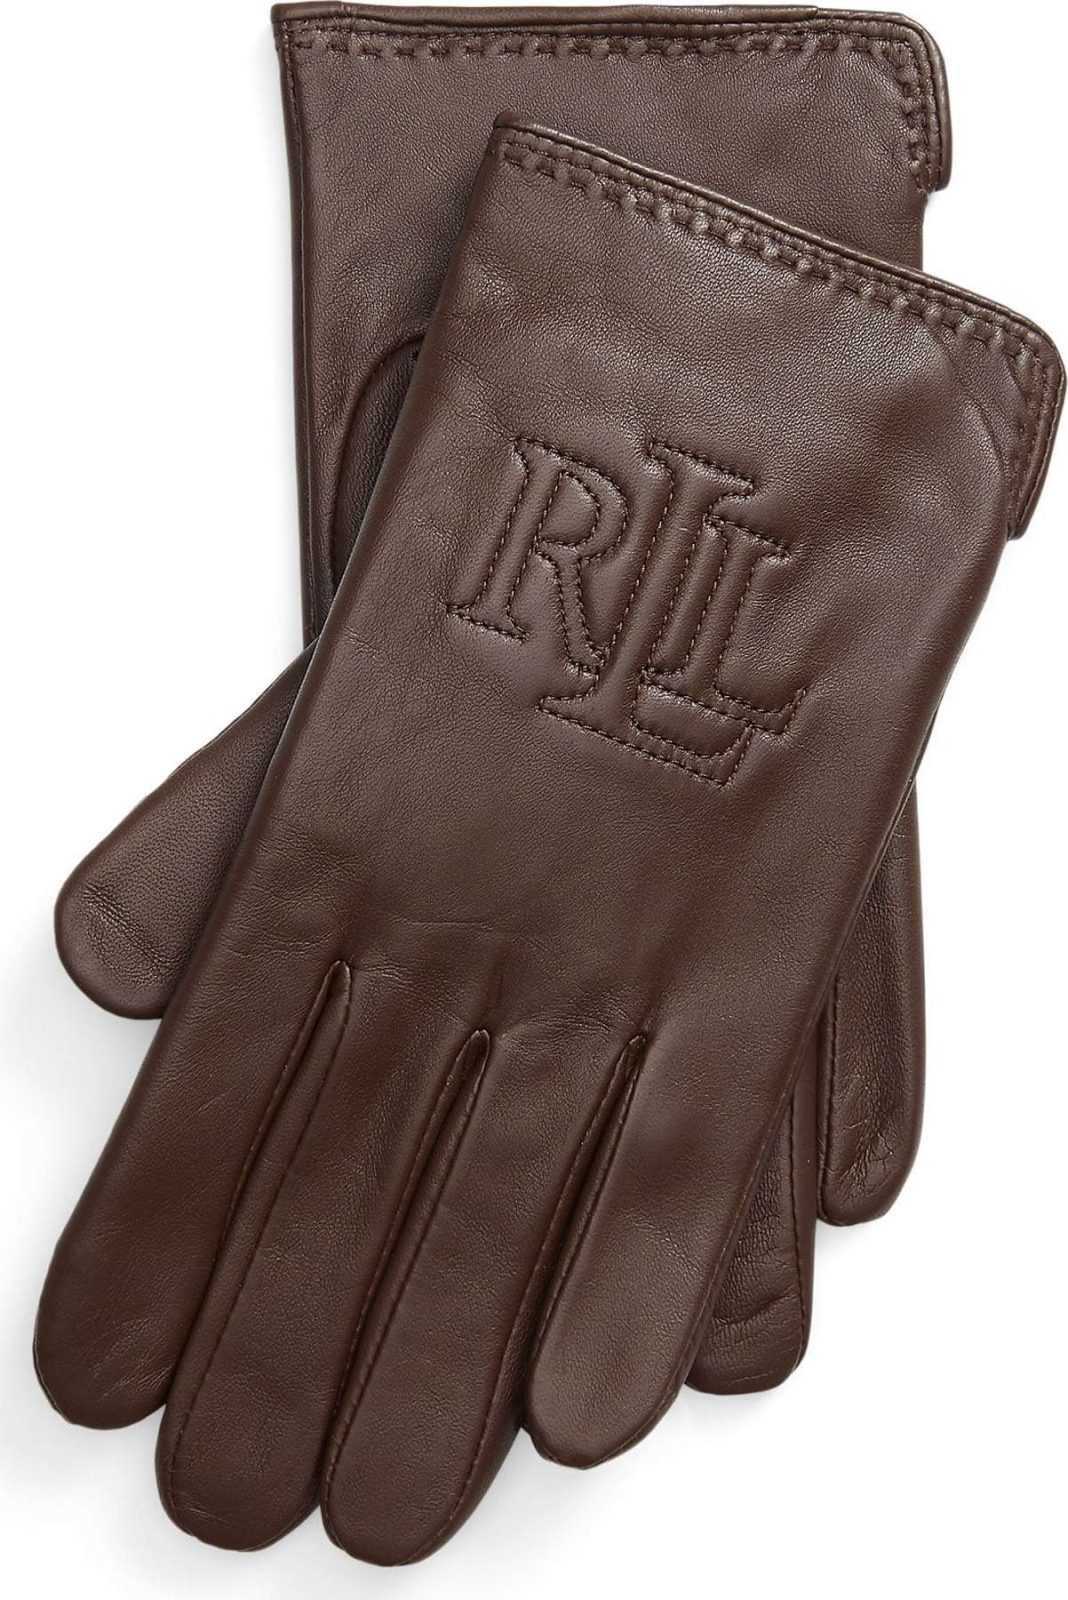 Lauren Ralph Lauren Prstové rukavice čokoládová